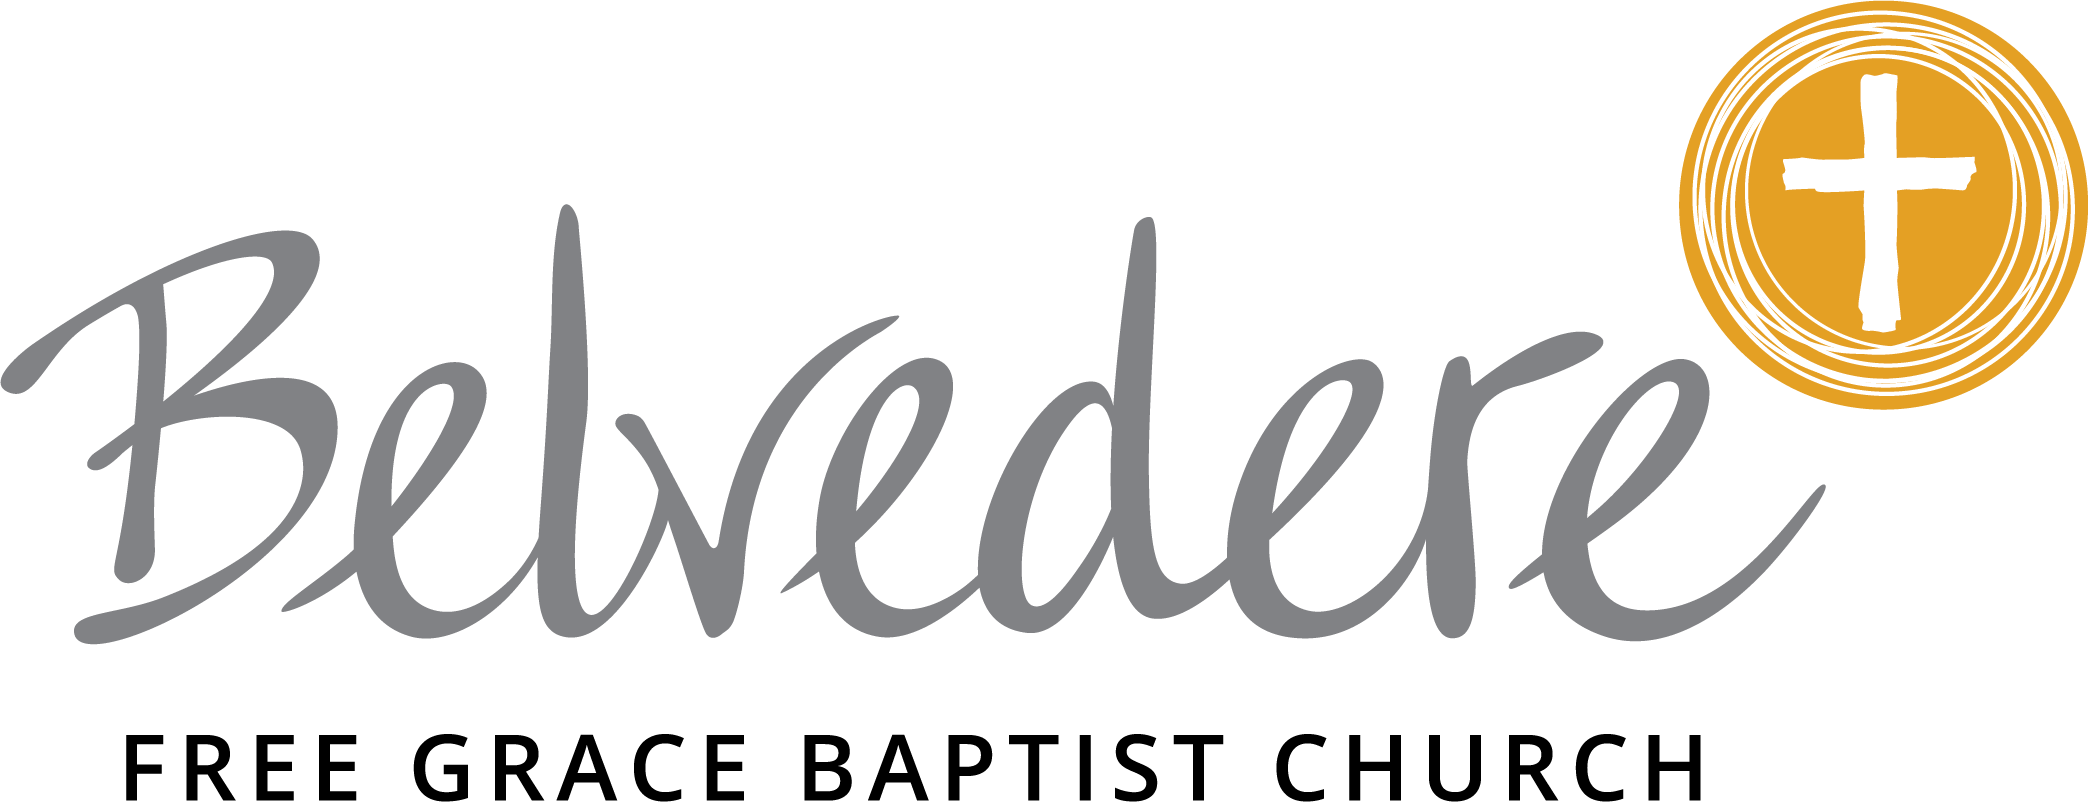 Belvedere Logo - Belvedere Logo Revised 2 – Free Grace Baptist Church – Belvedere